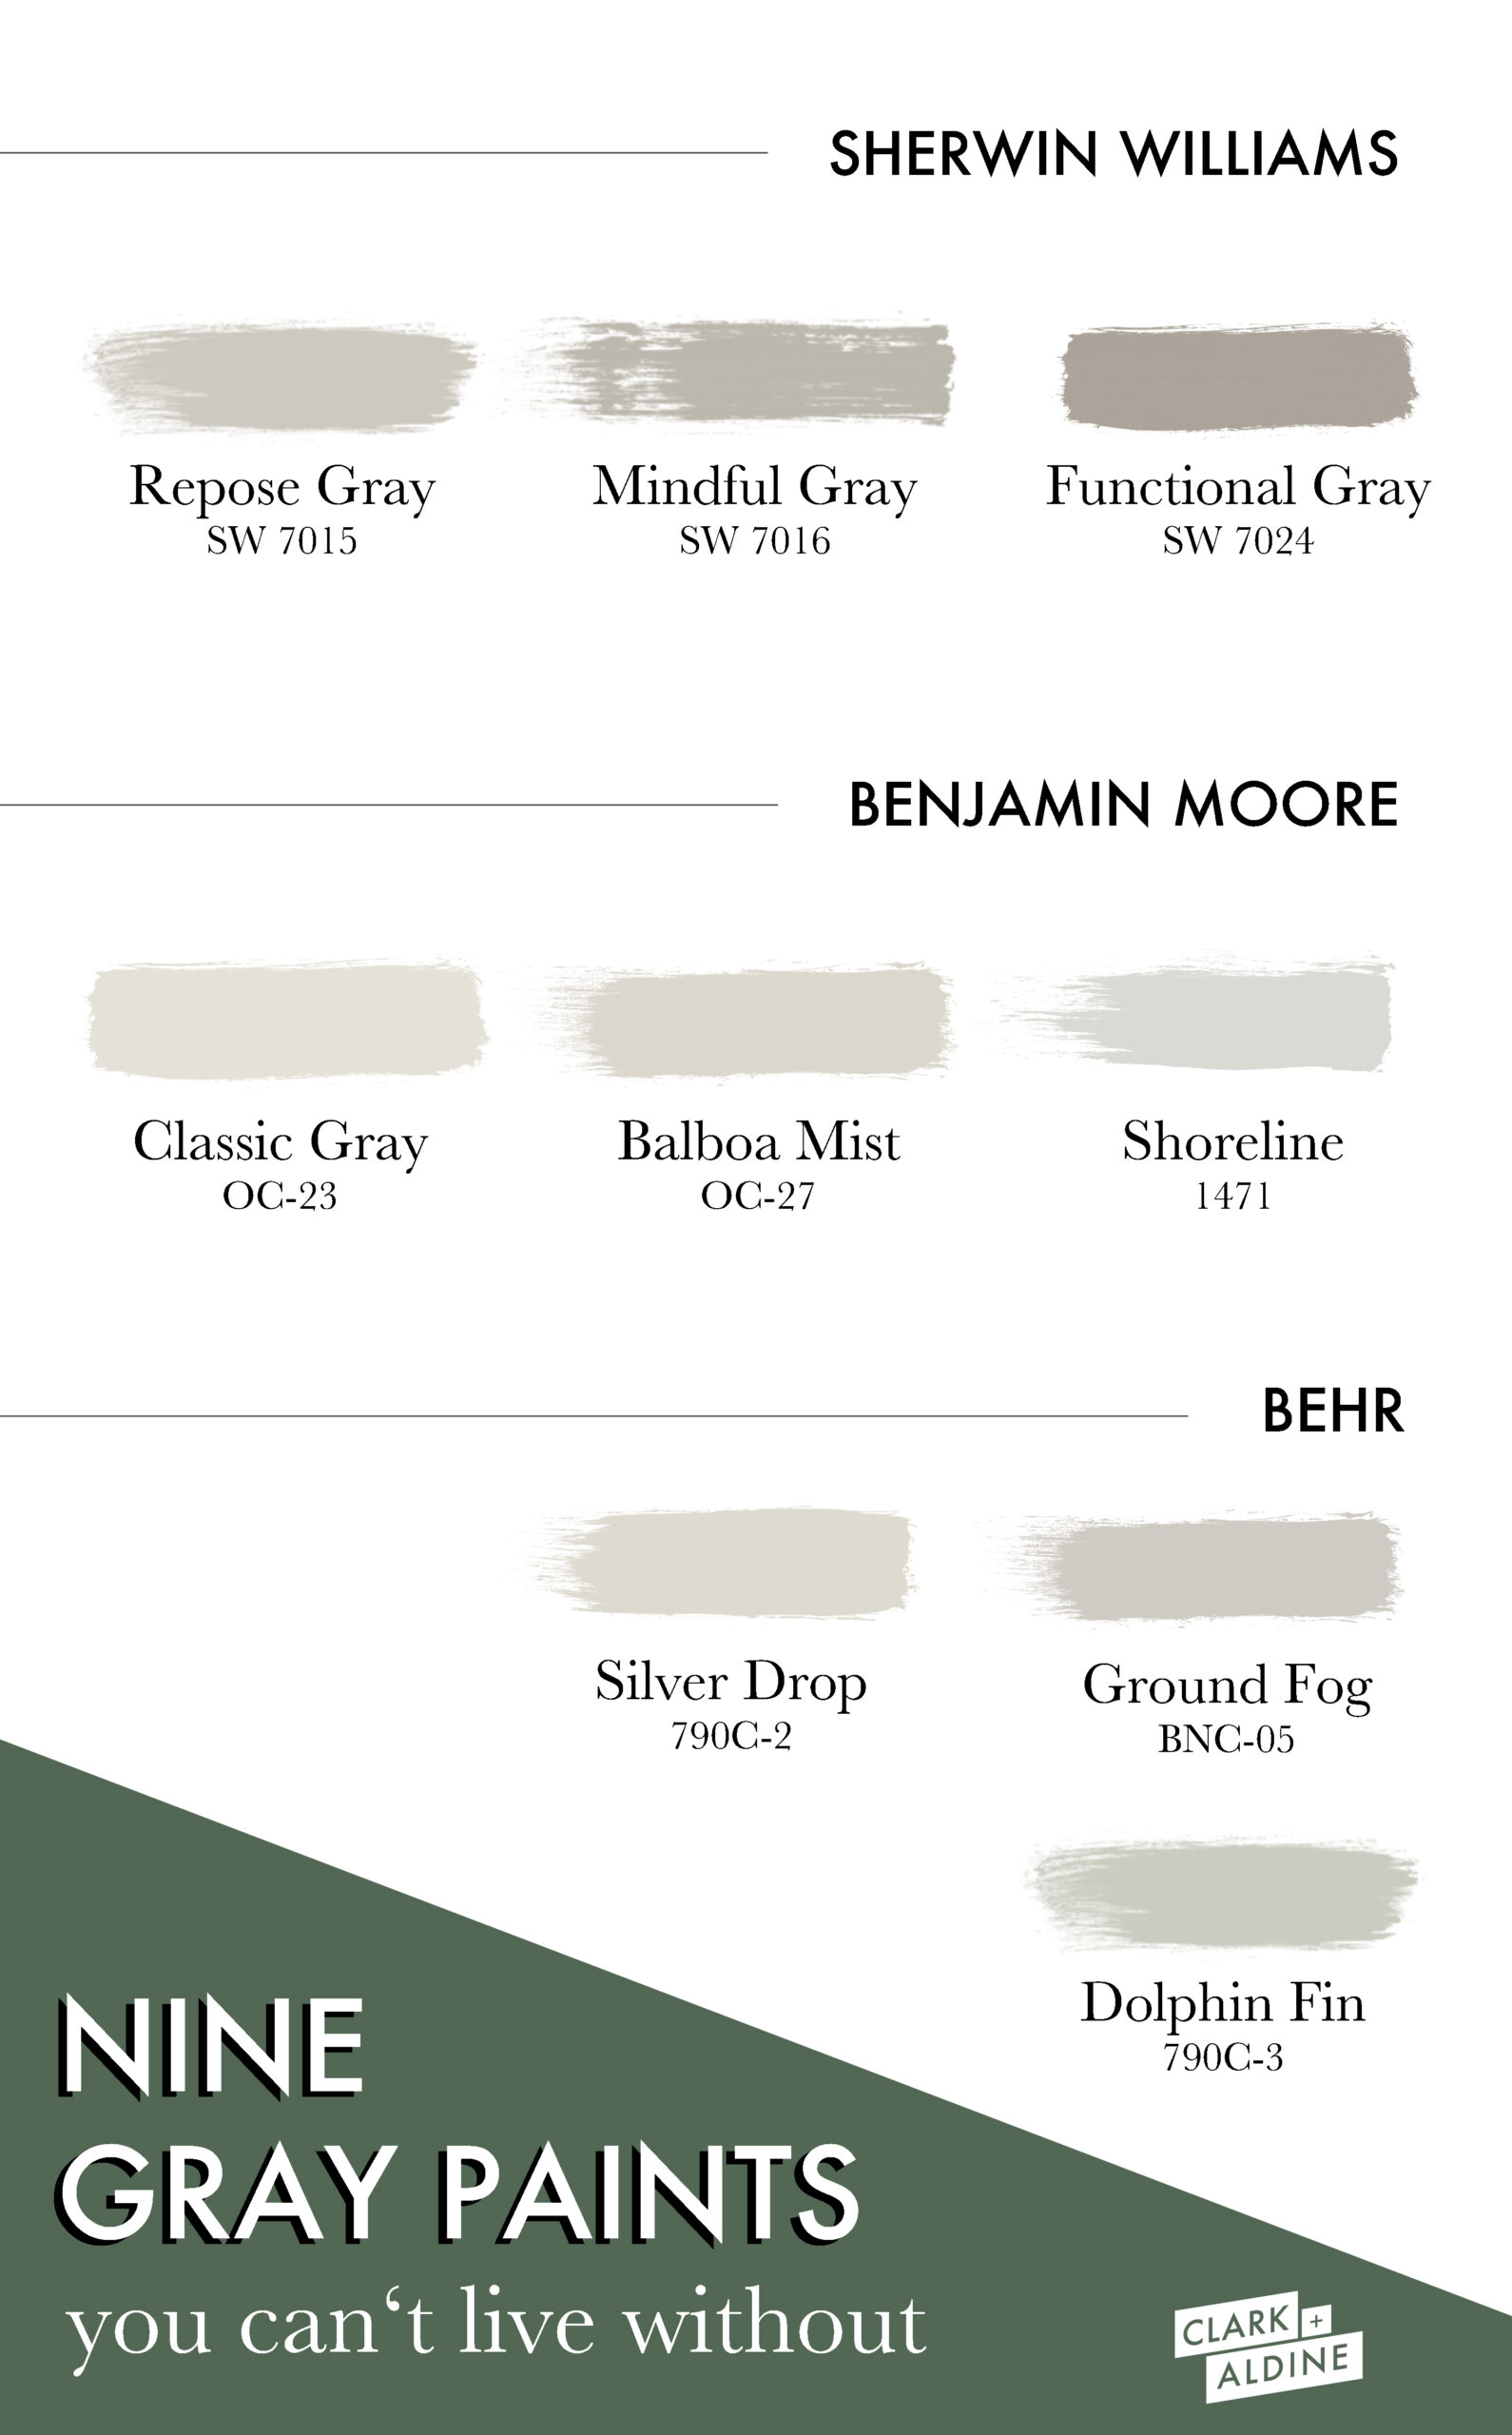 sherwin williams gray paint behr gray paint, benjamin moore gray paint